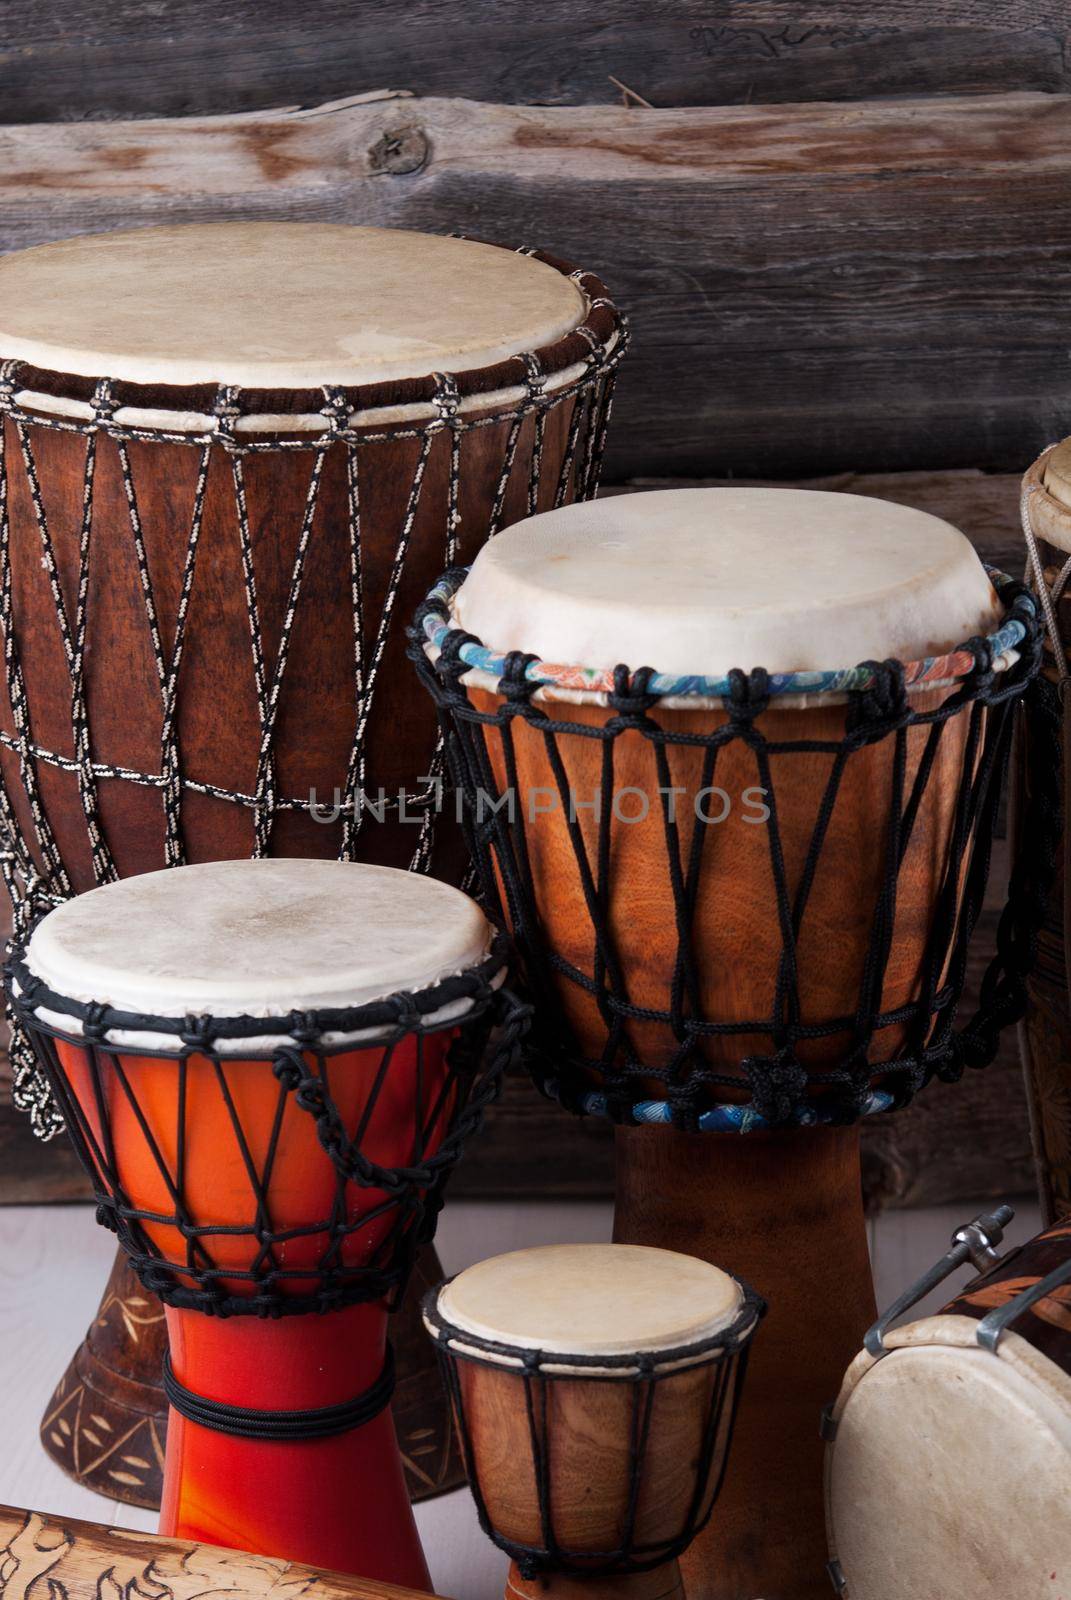 variation of ethnic drums by maramorosz